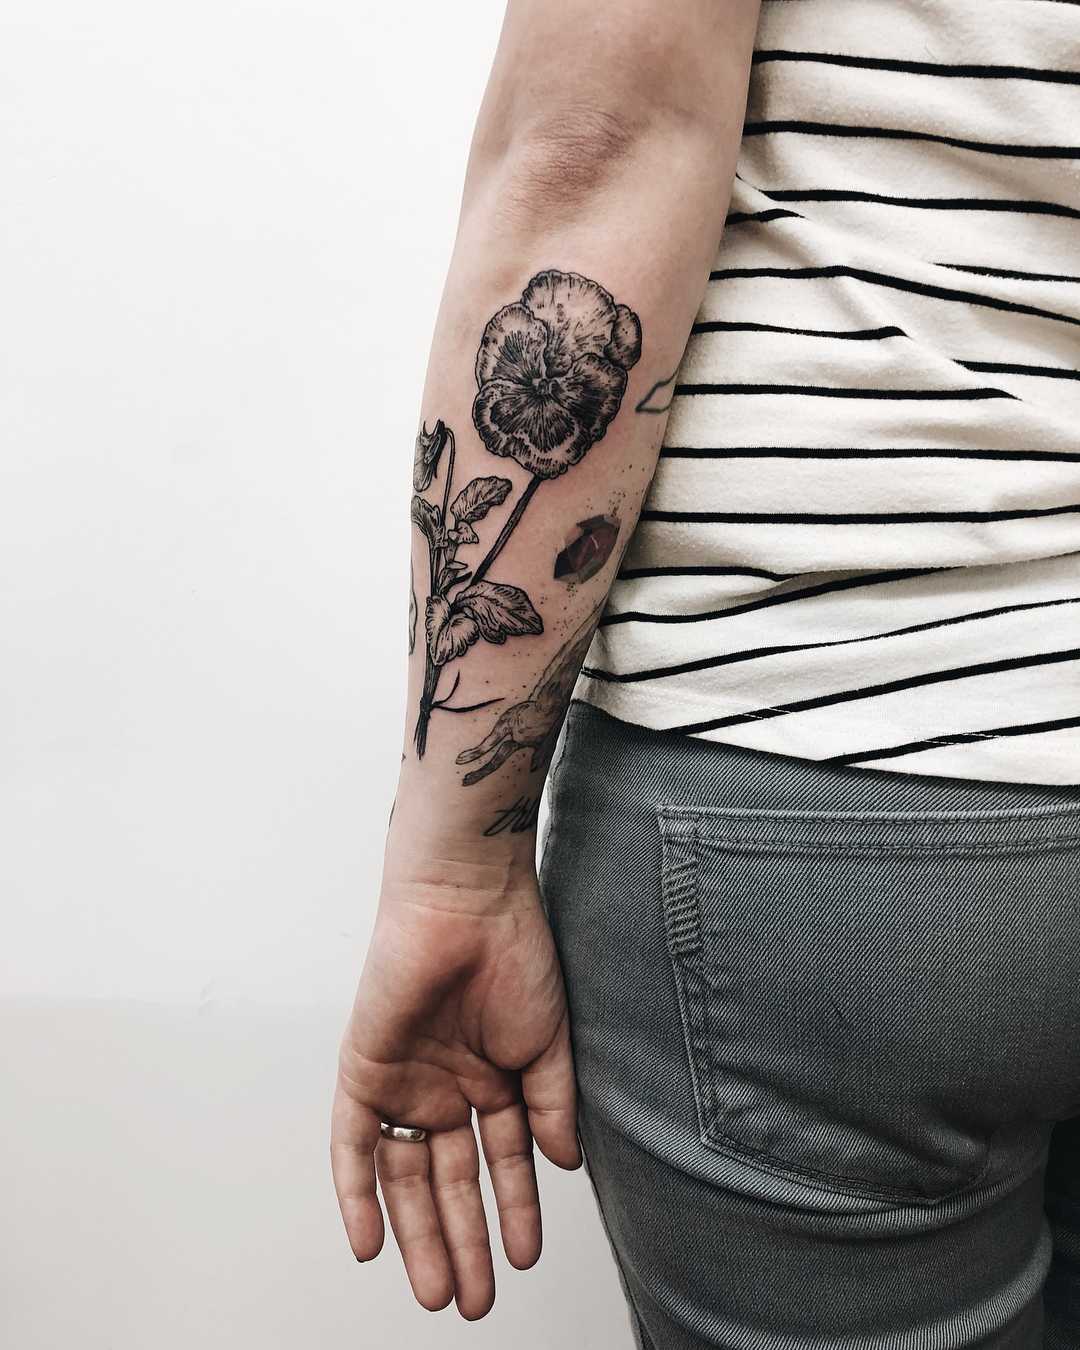 Pansy flower tattoo